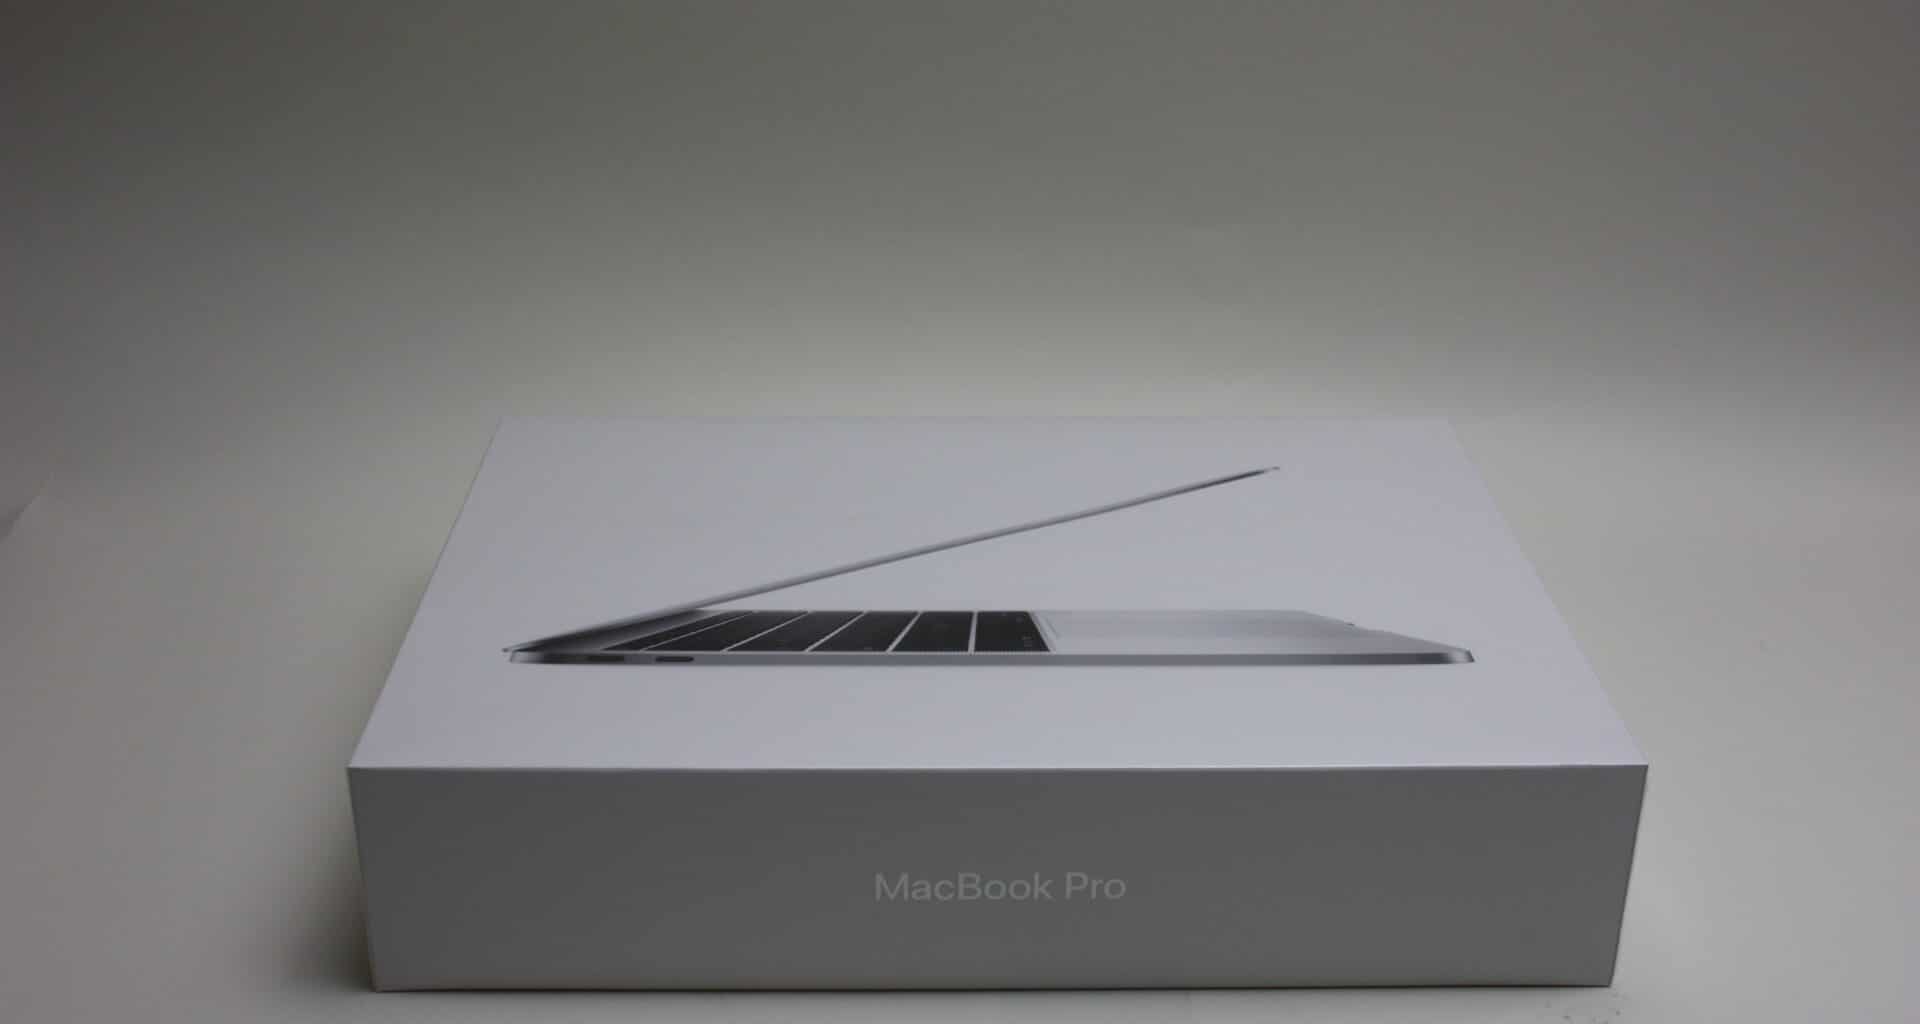 Caixa de MacBook Pro